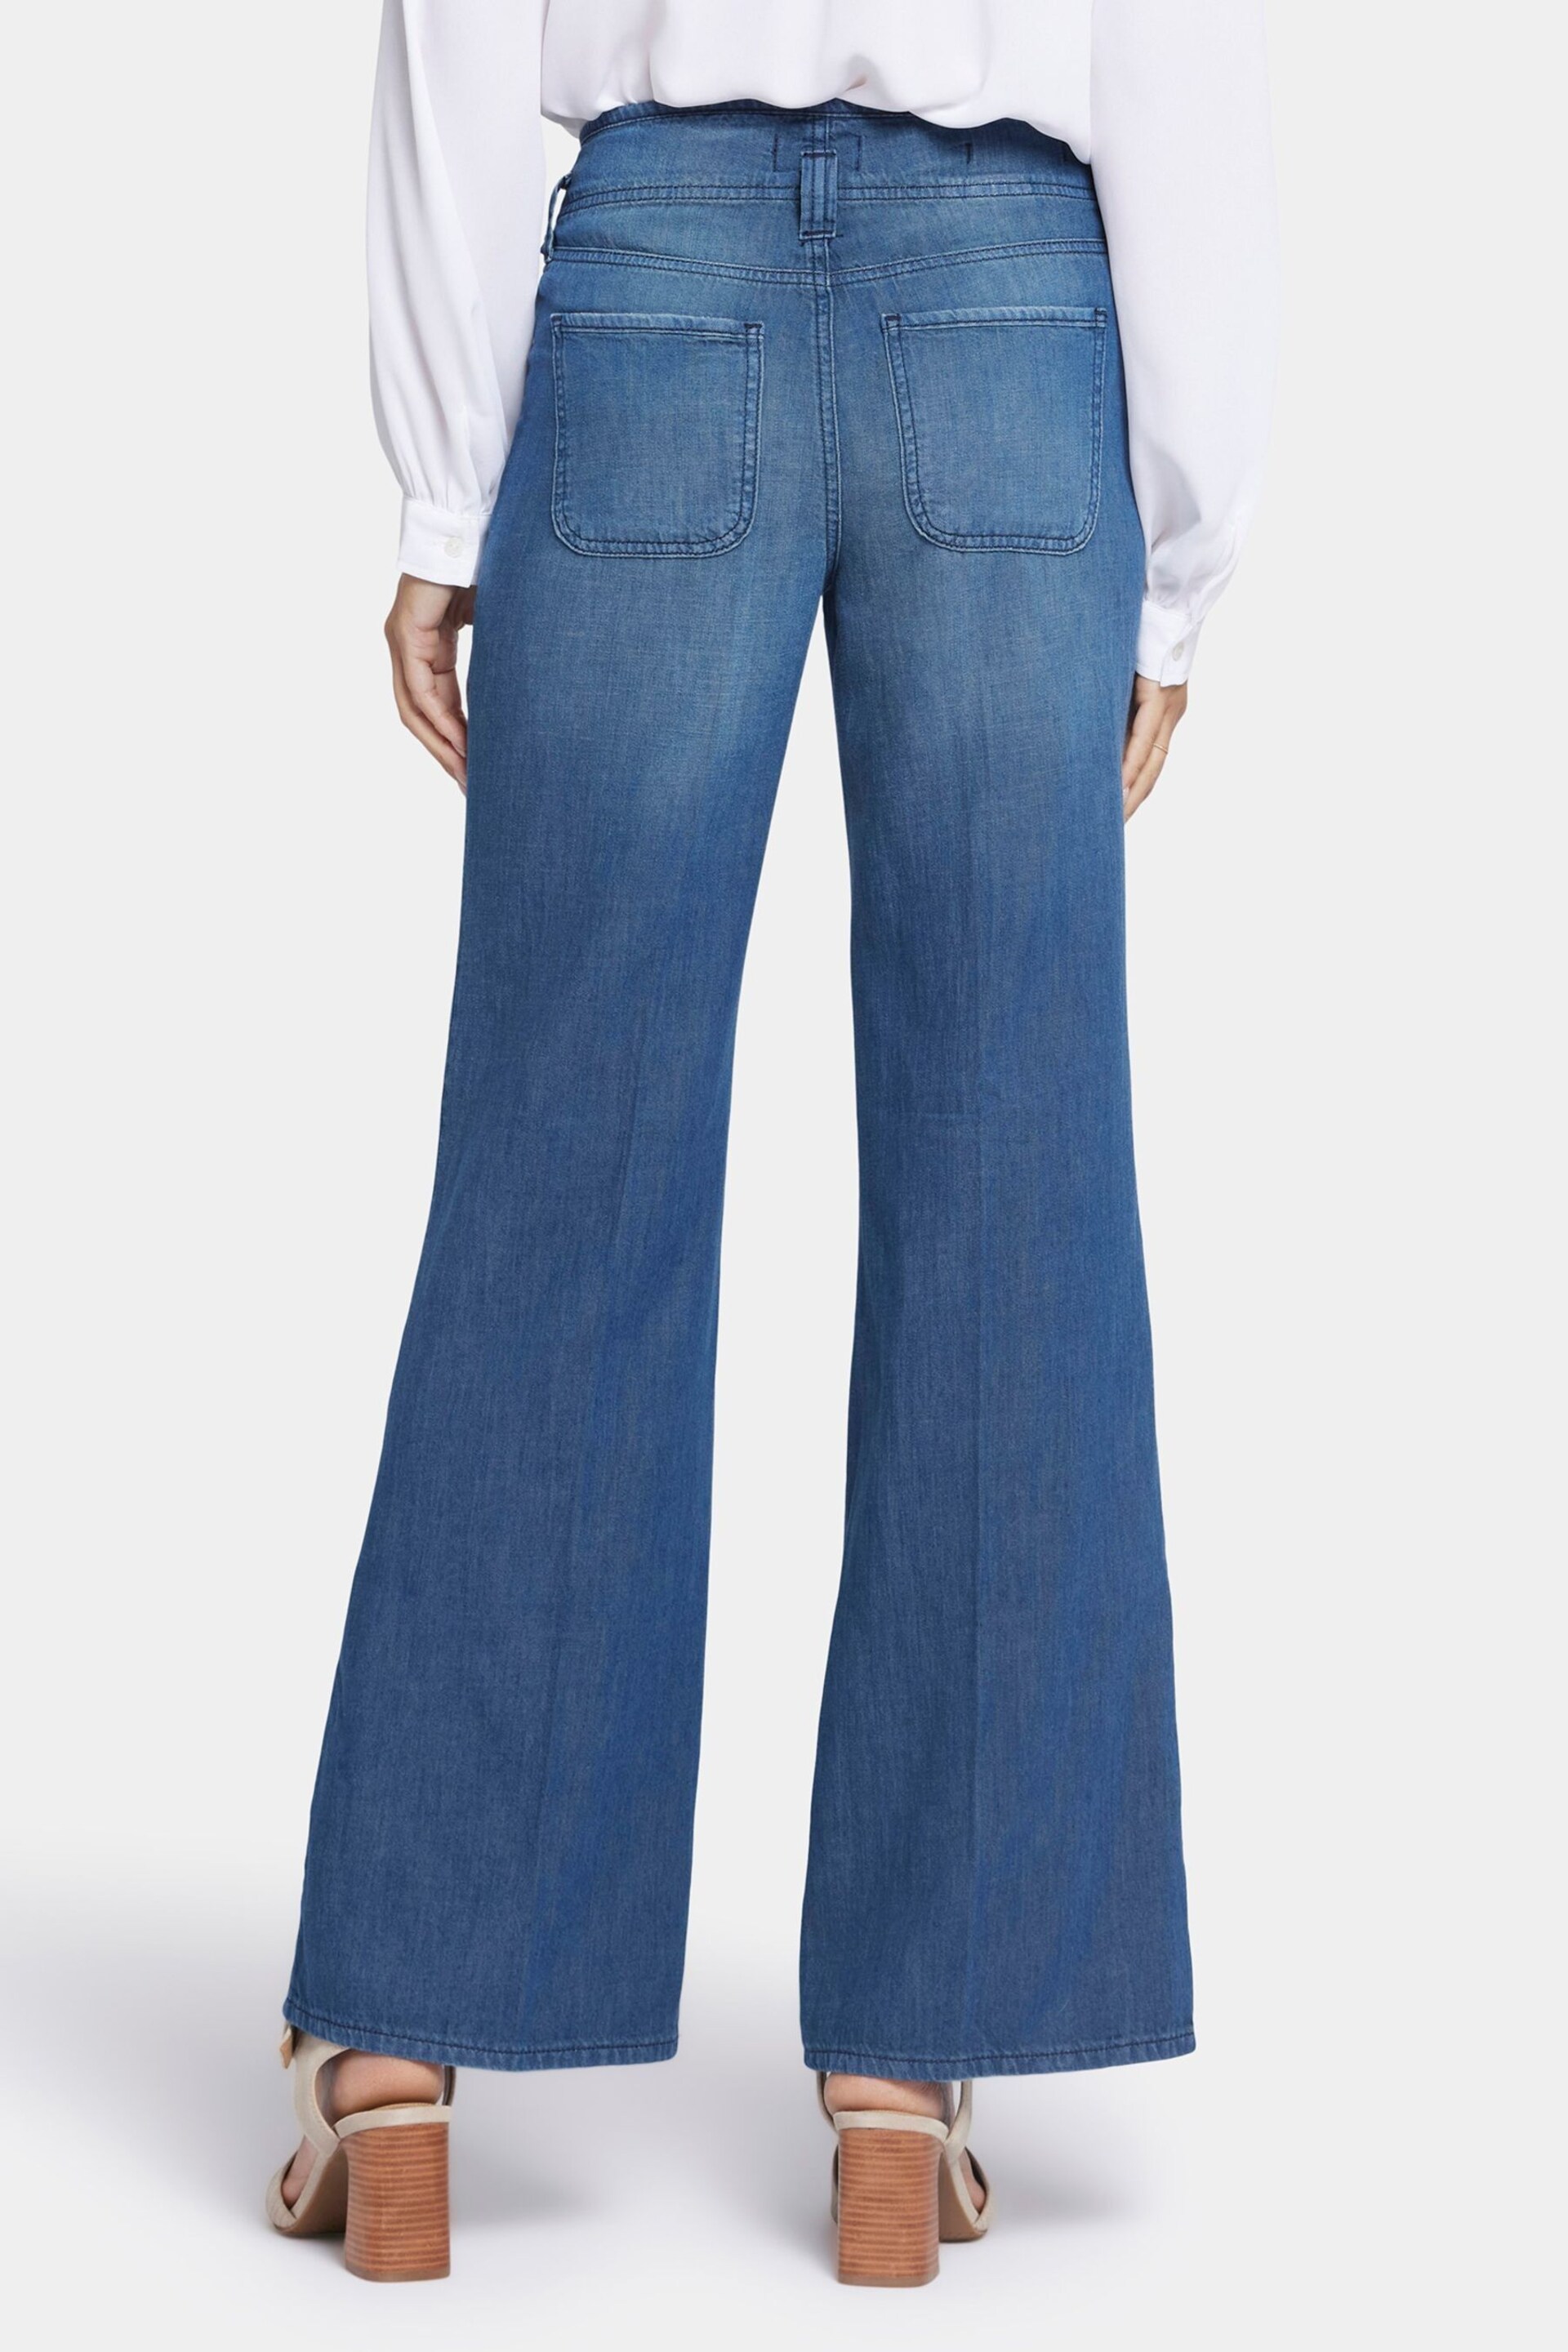 NYDJ Blue High Rise Teresa Wide Leg Jeans - Image 2 of 7